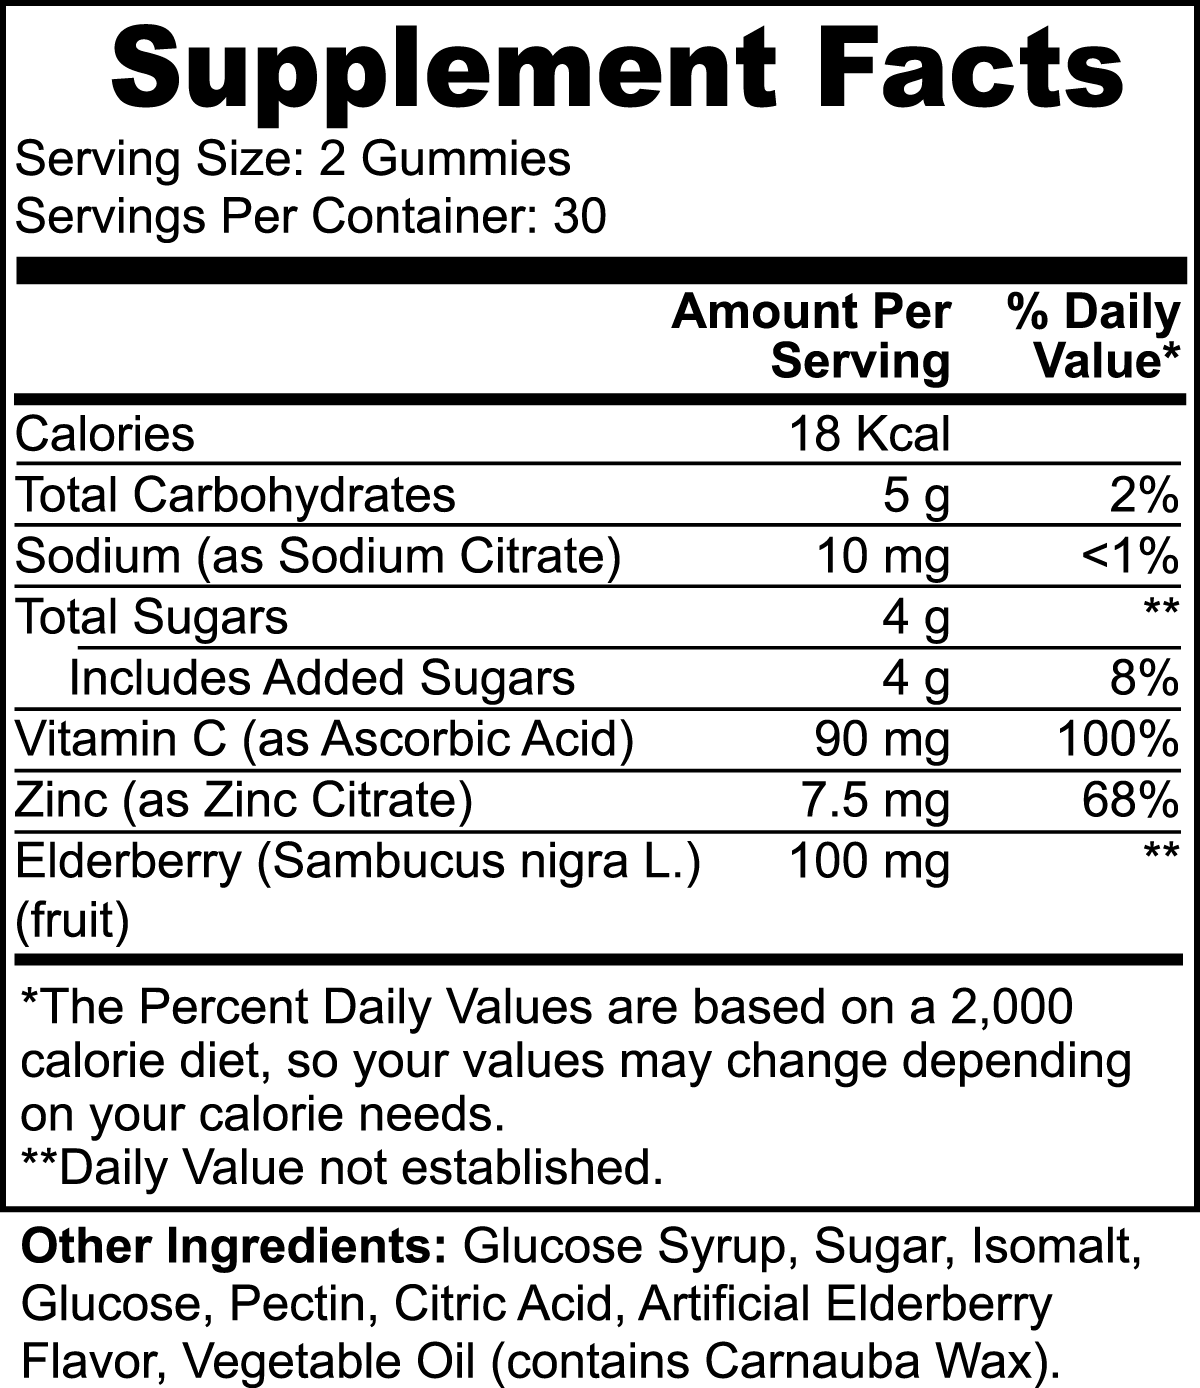 Elderberry & Vitamin C Gummies 60ct Gummies DLM Wellness +